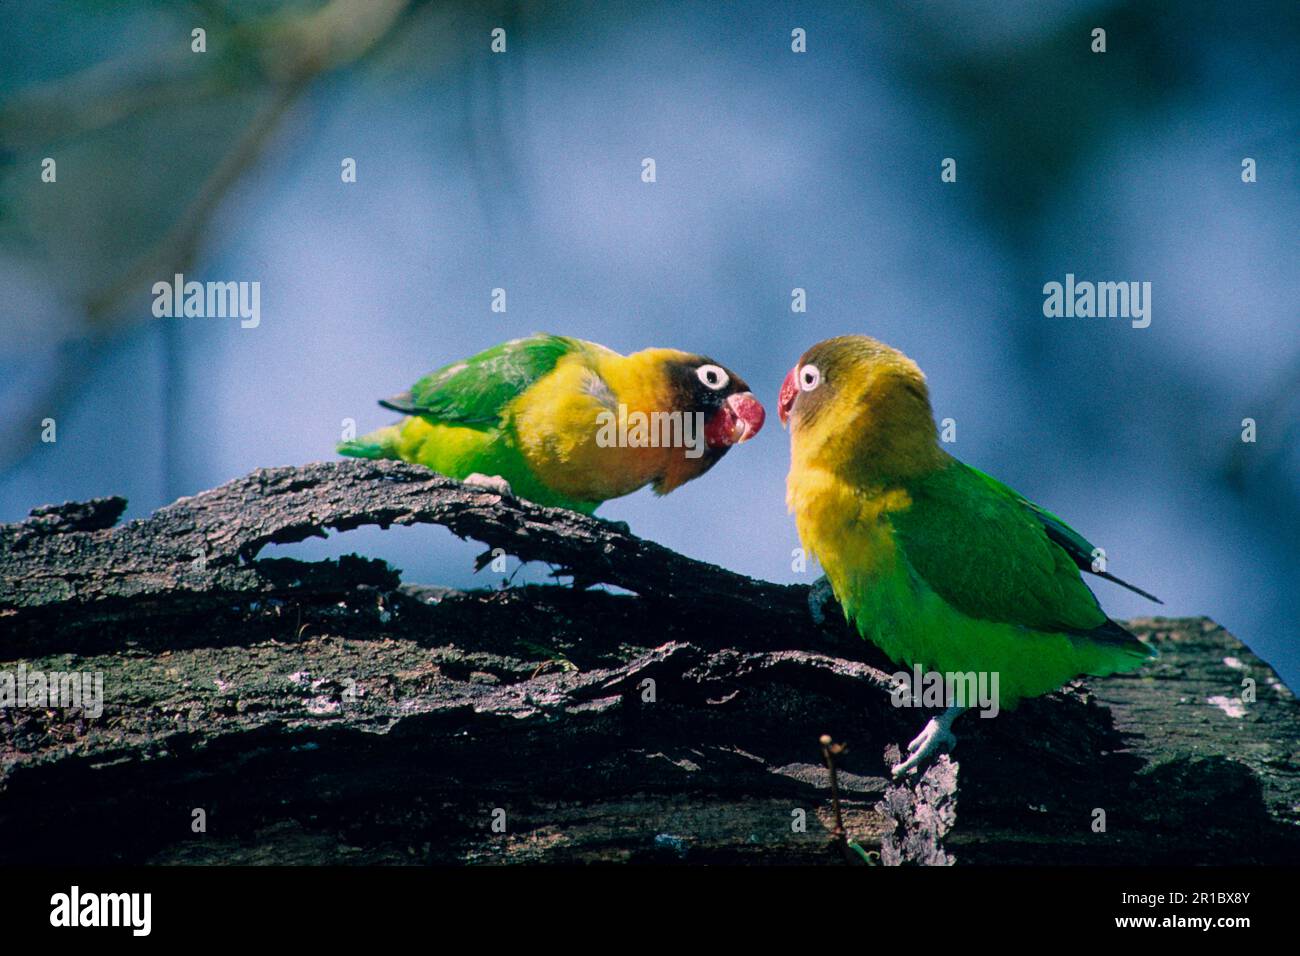 Mixed breed, Parrots, Animals, Lovebirds, Birds, fisherman's/Yellow- Collared Lovebird Hybrid (Agapornis fischeri x personata) Stock Photo